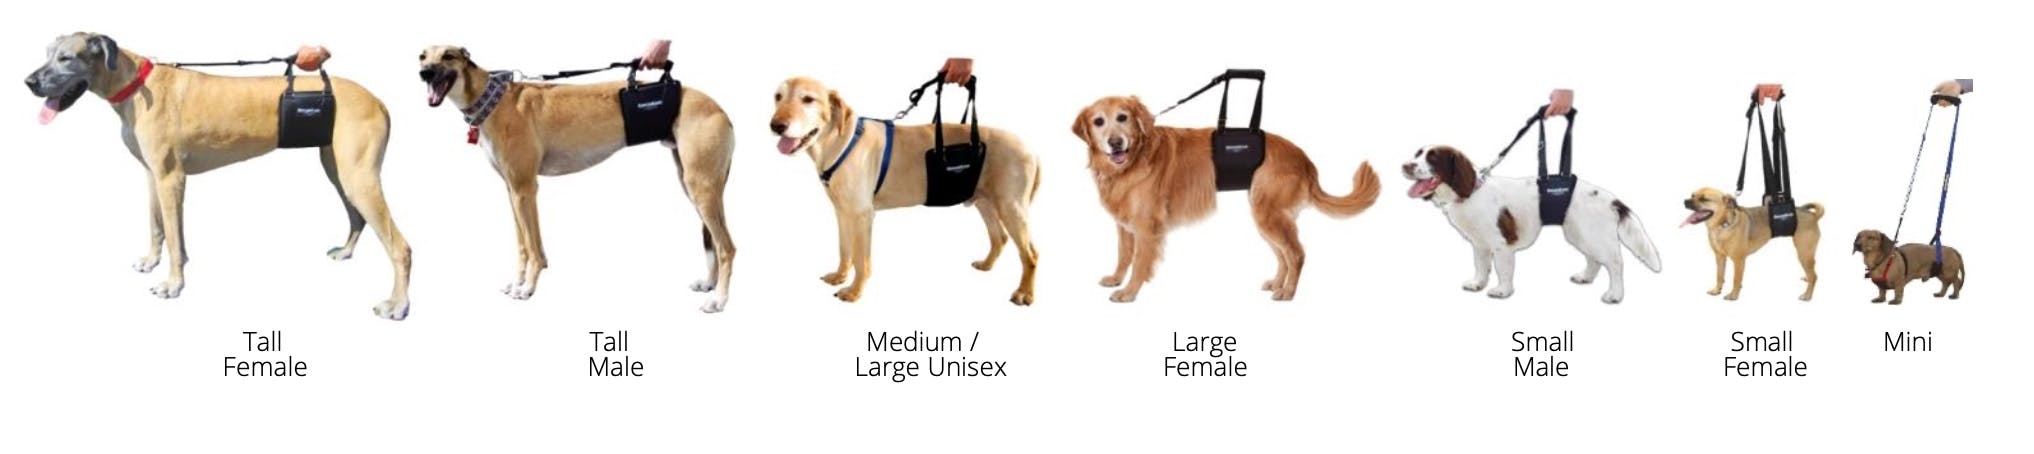 GingerLead- Dog Support & Rehabilitation Harnesses - Image 0